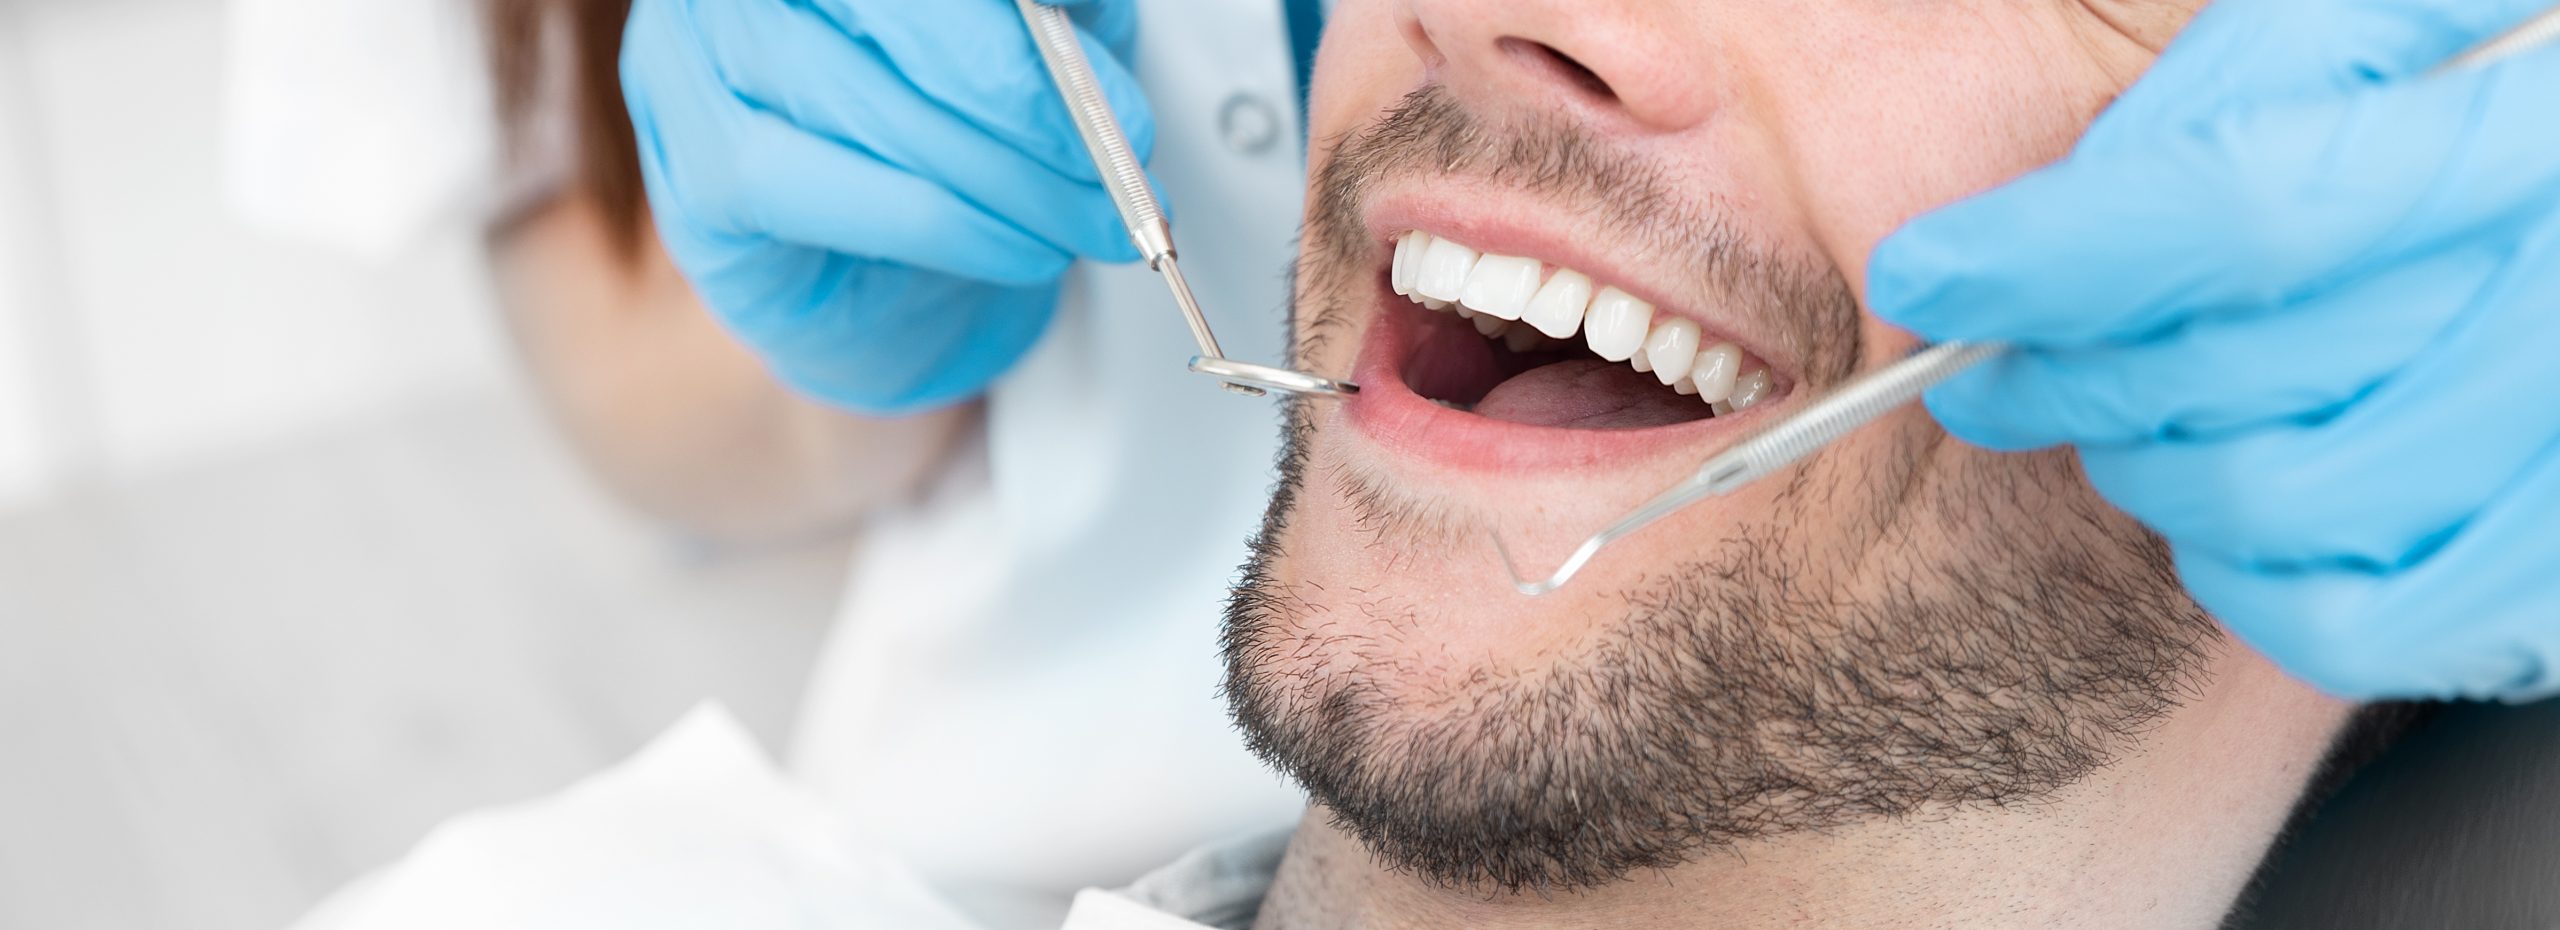 Parodontologia e chirurgia parodontale